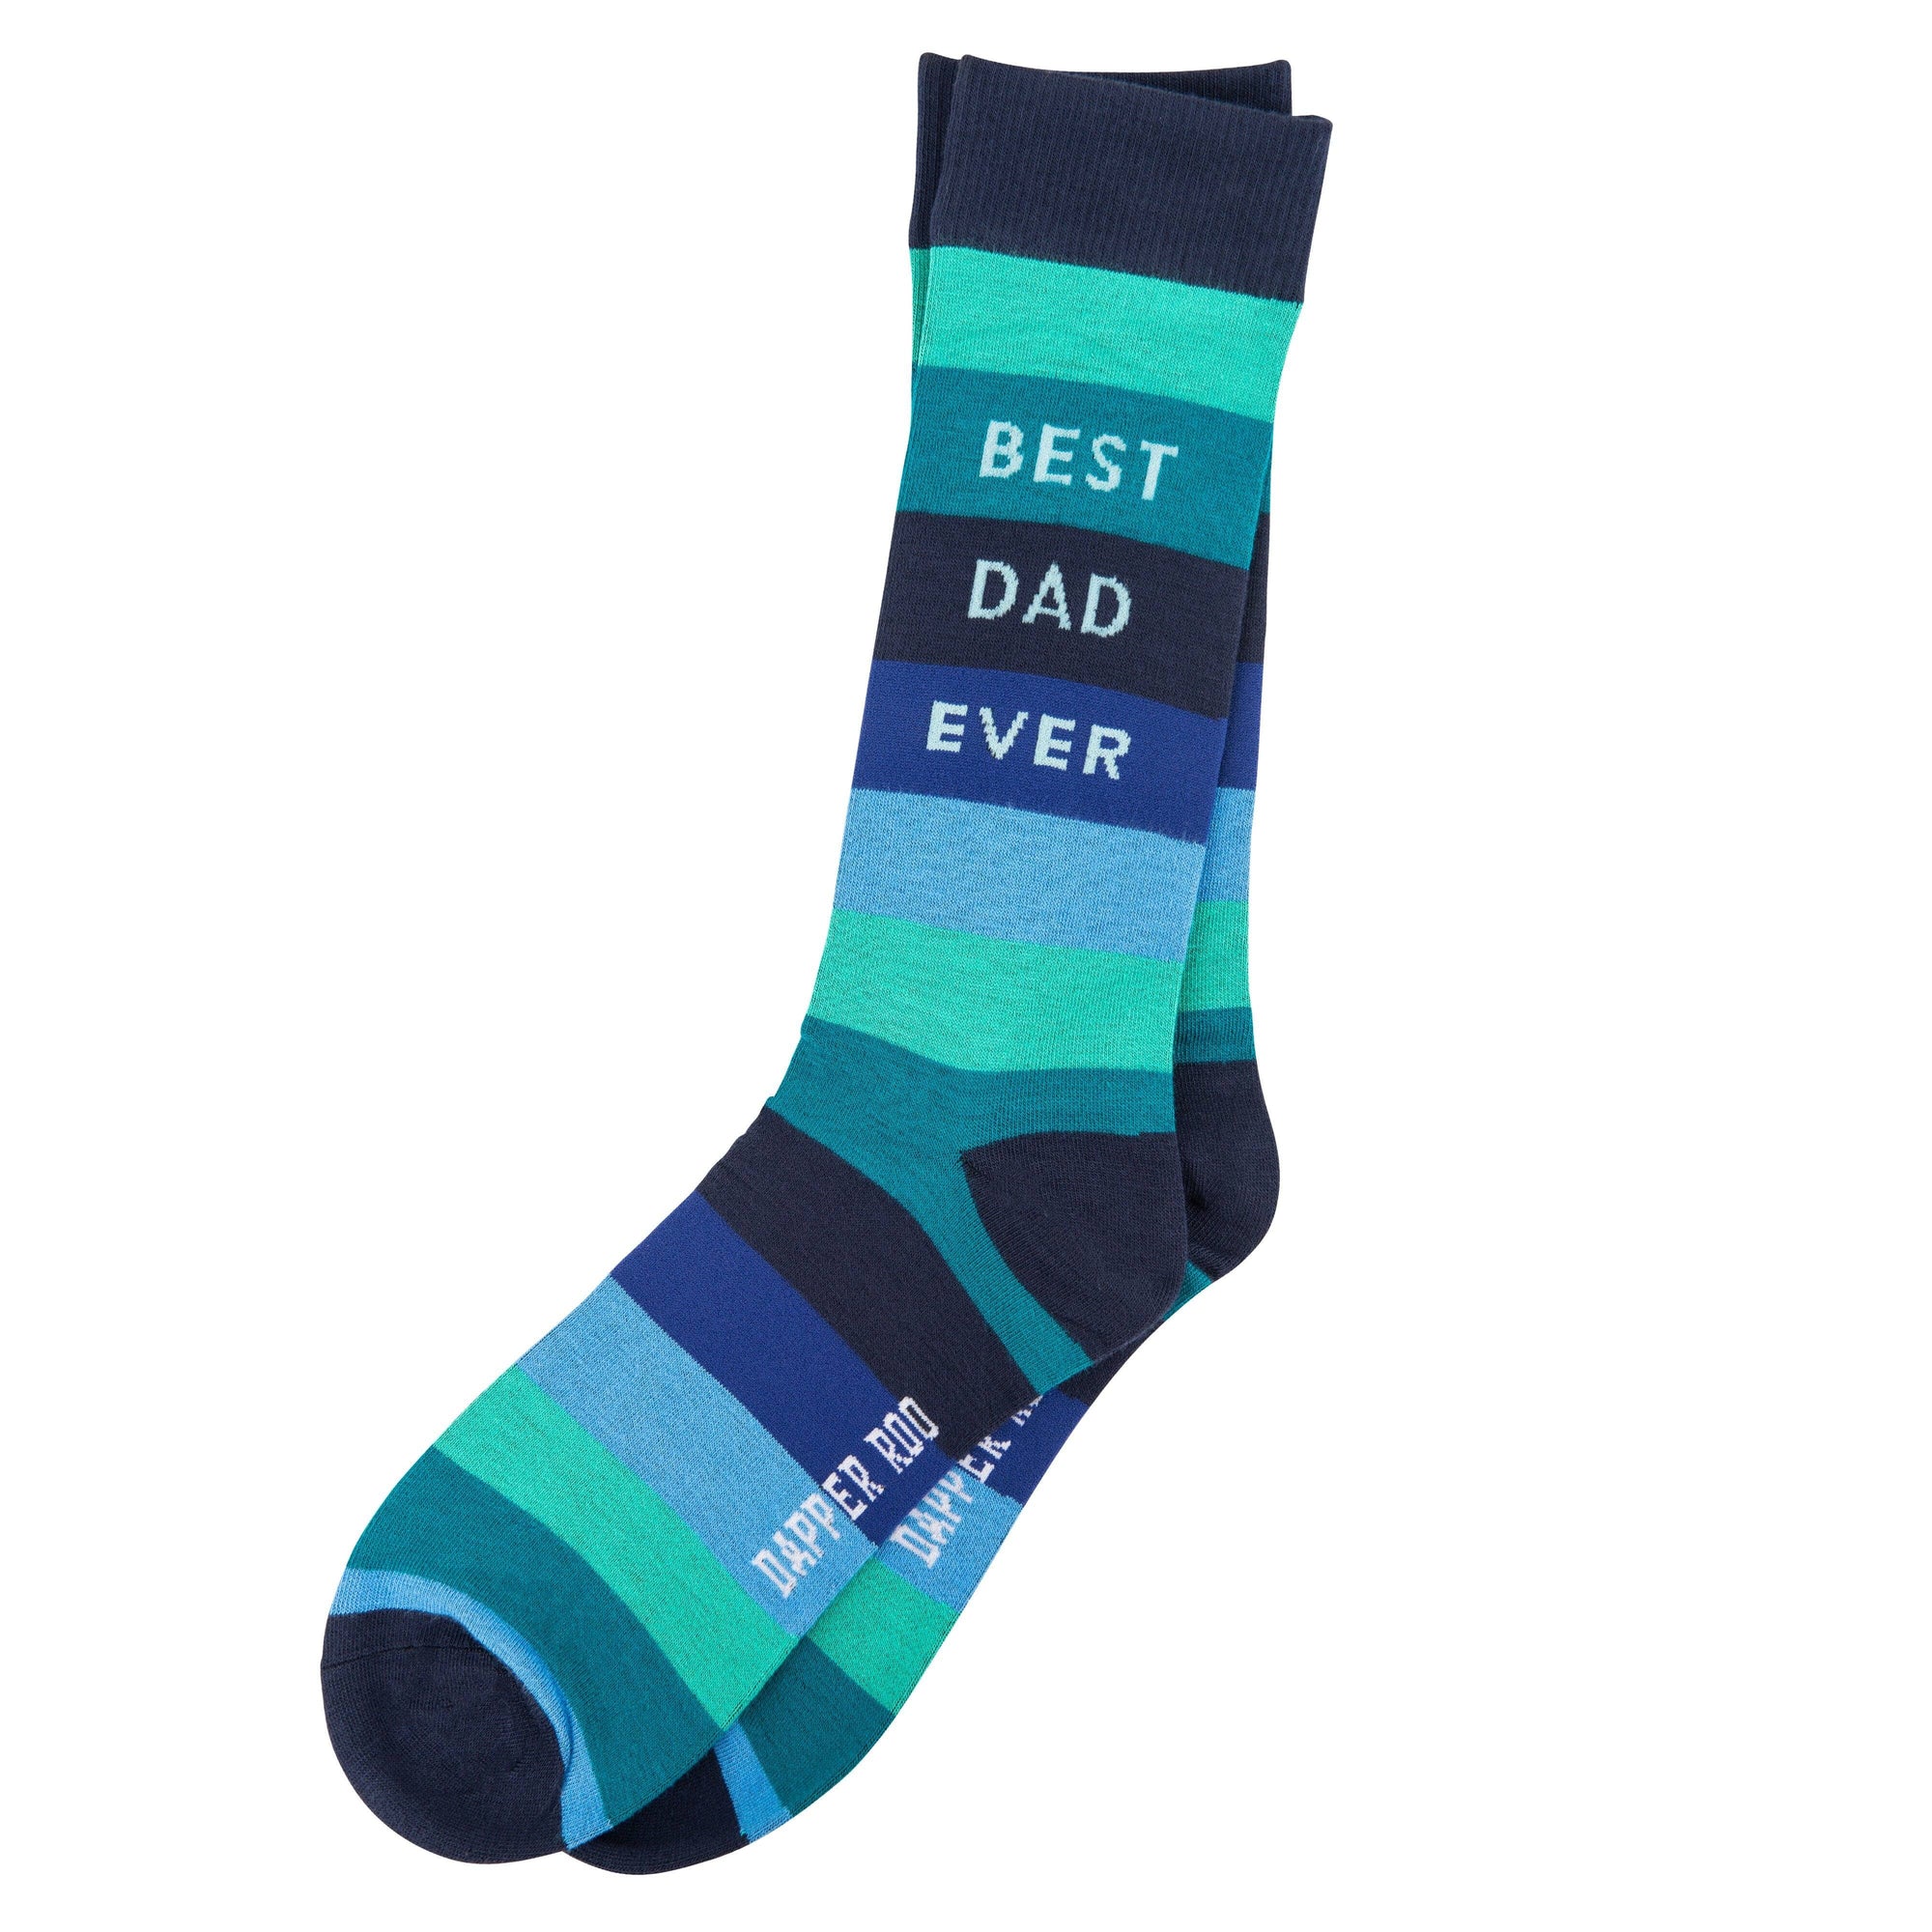 Best Dad Ever Bamboo Socks by Dapper Roo Socks Dapper Roo 